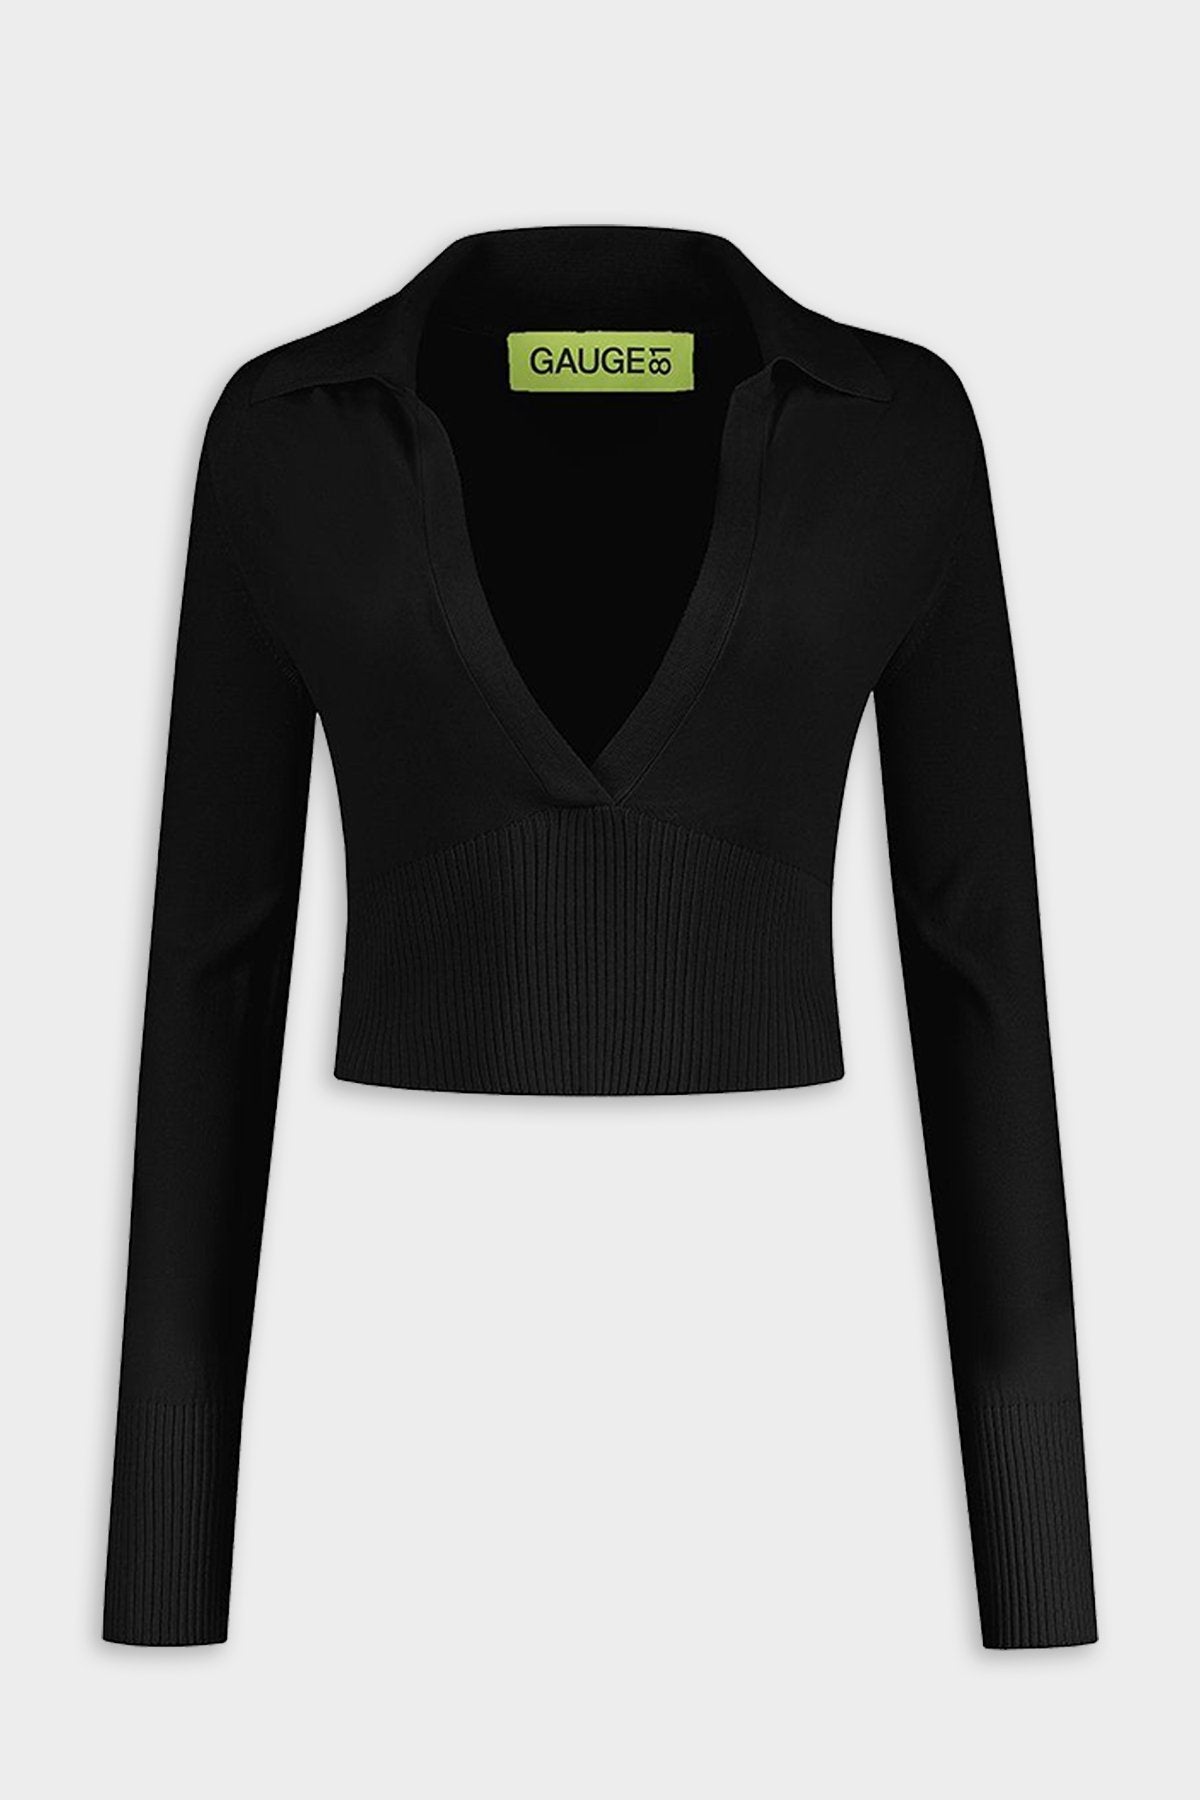 Burgos Long Sleeve Knit Top in Black - shop-olivia.com